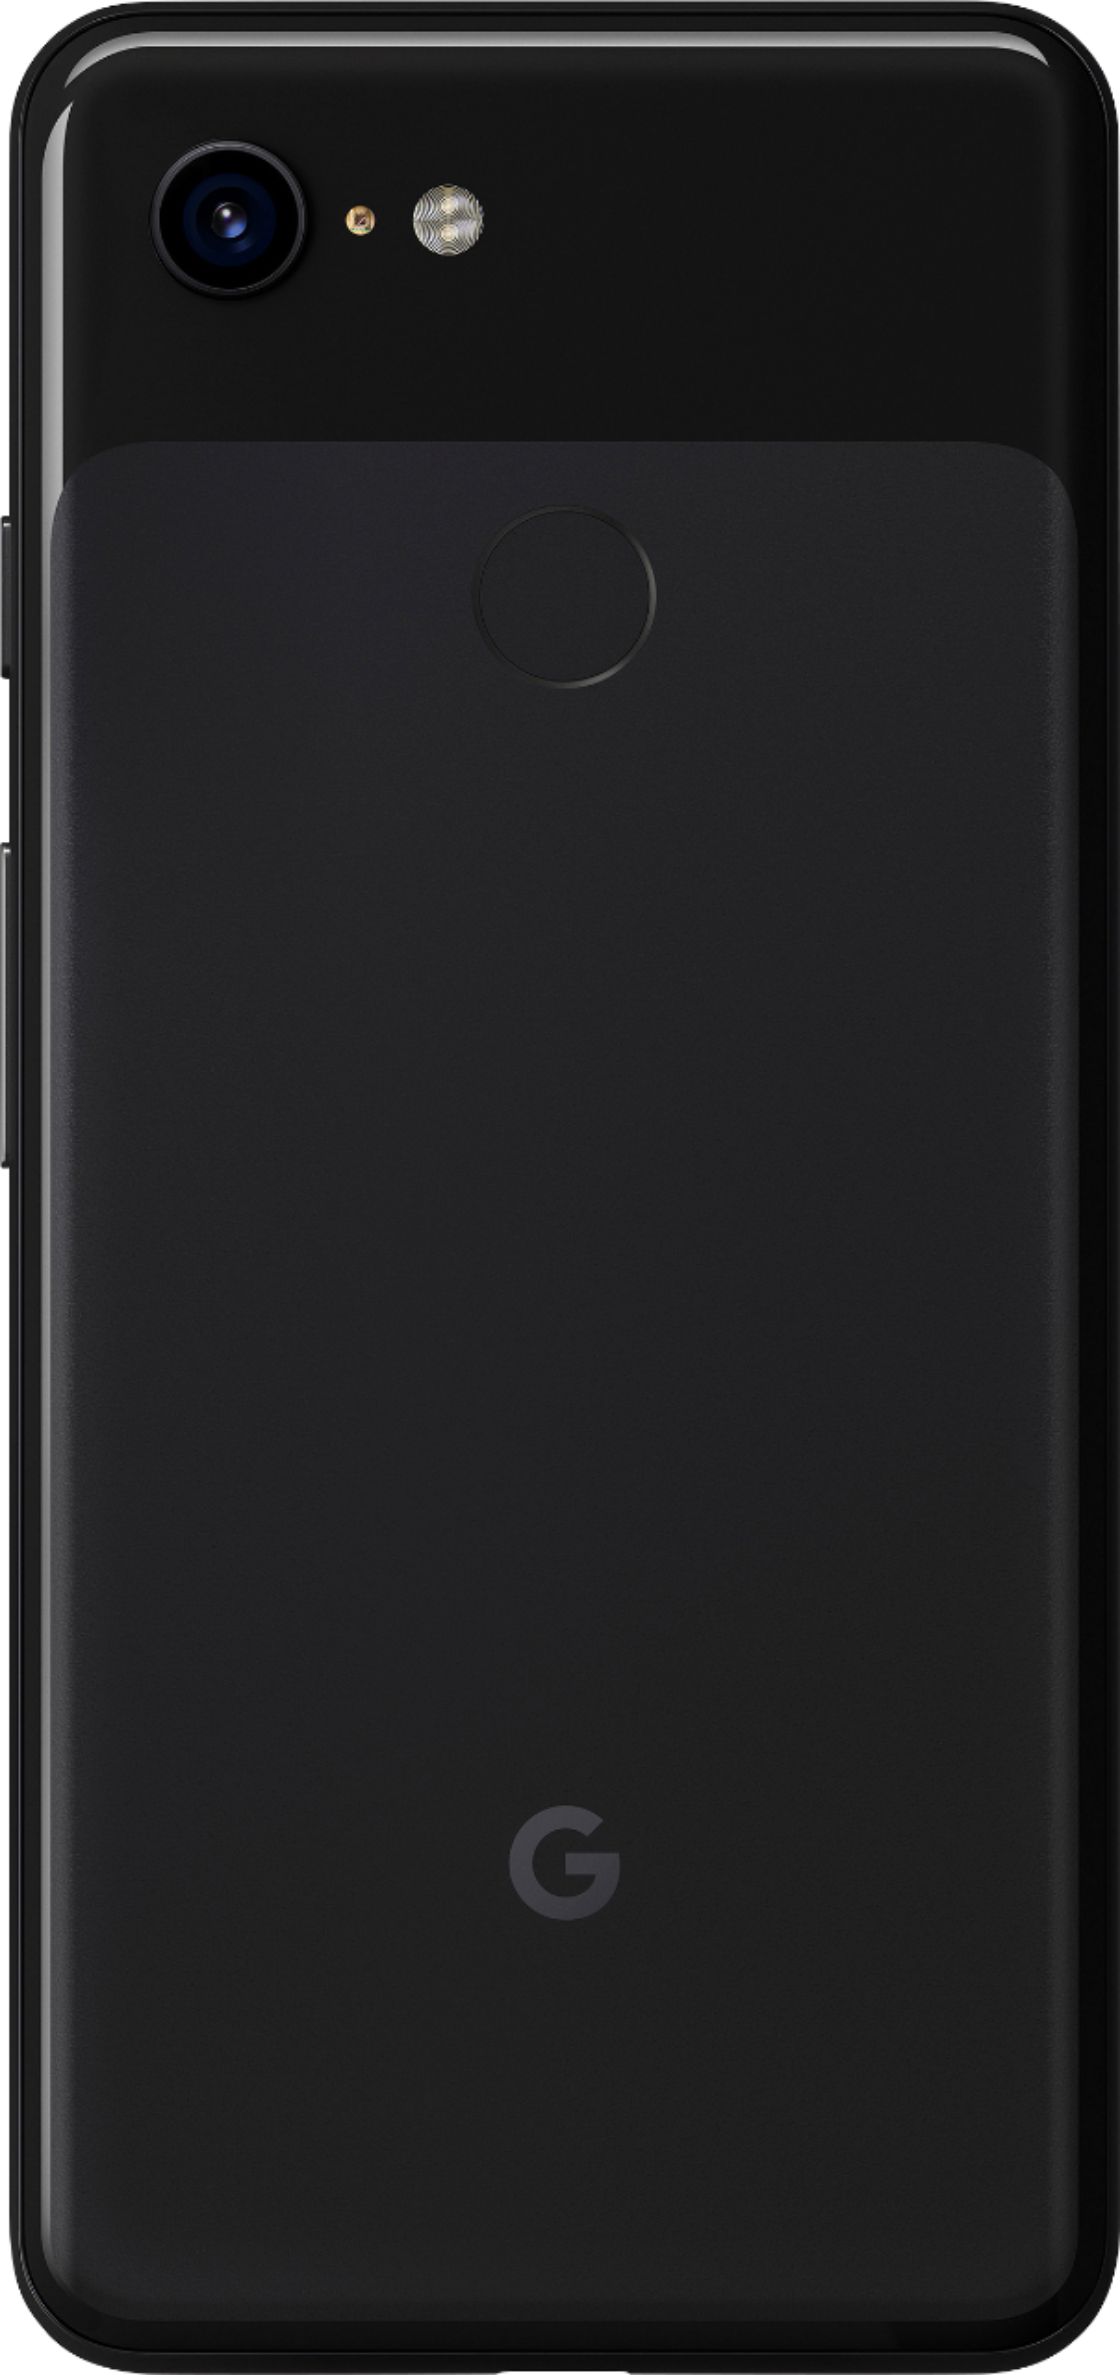 Back View: Google Pixel 3 - 4G smartphone - RAM 4 GB / Internal Memory 64 GB - OLED display - 5.5" - 2160 x 1080 pixels - rear camera 12.2 MP - 2x front cameras 8 MP, 8 MP - just black